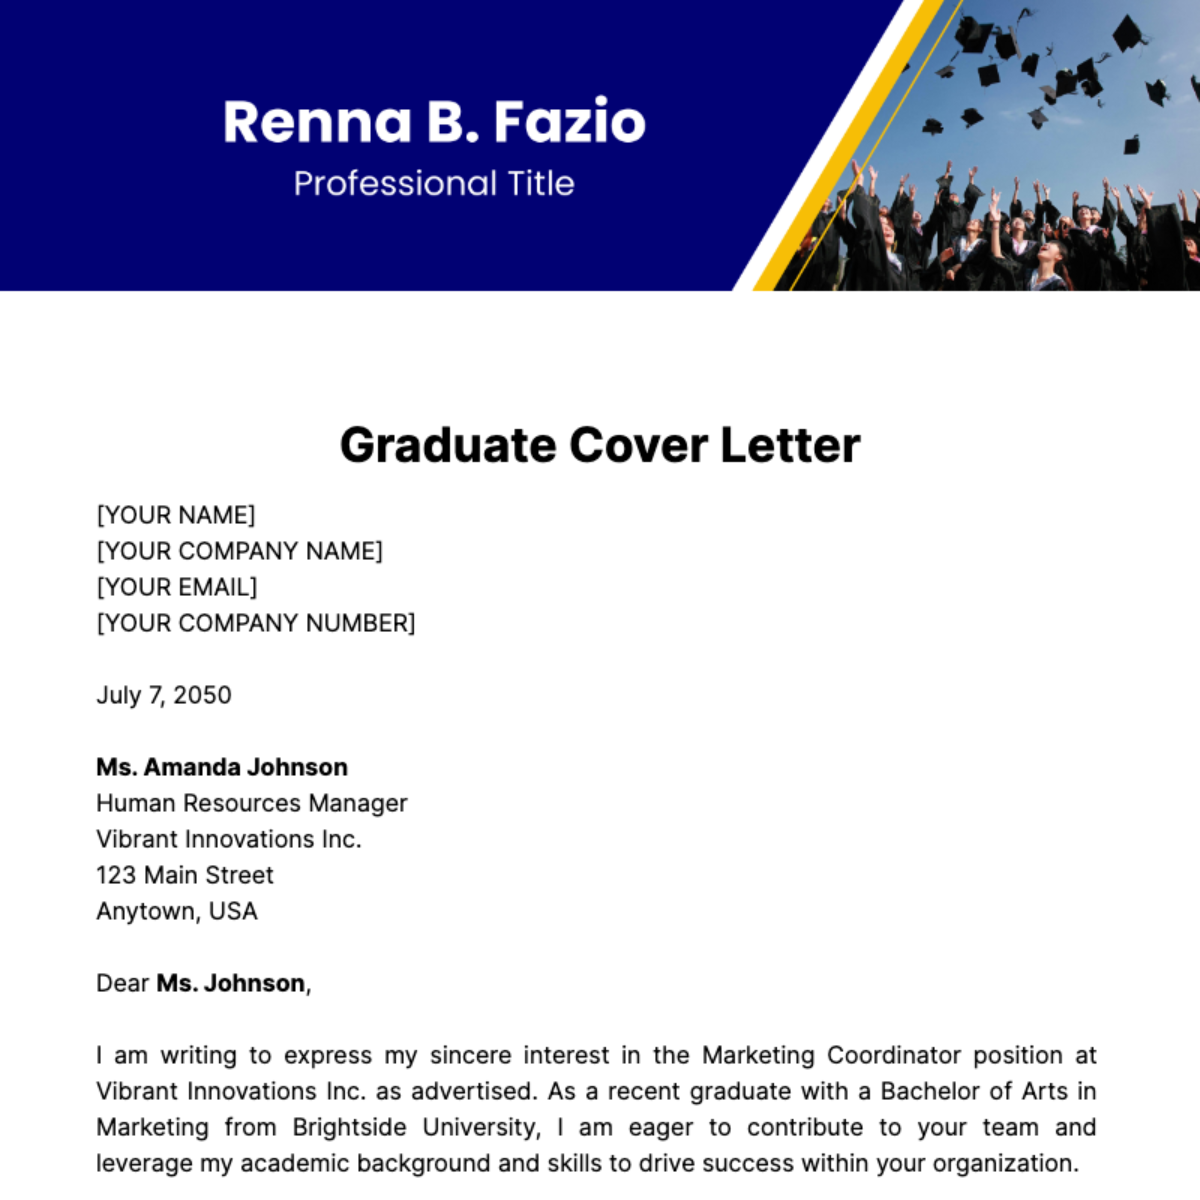 Graduate Cover Letter Template